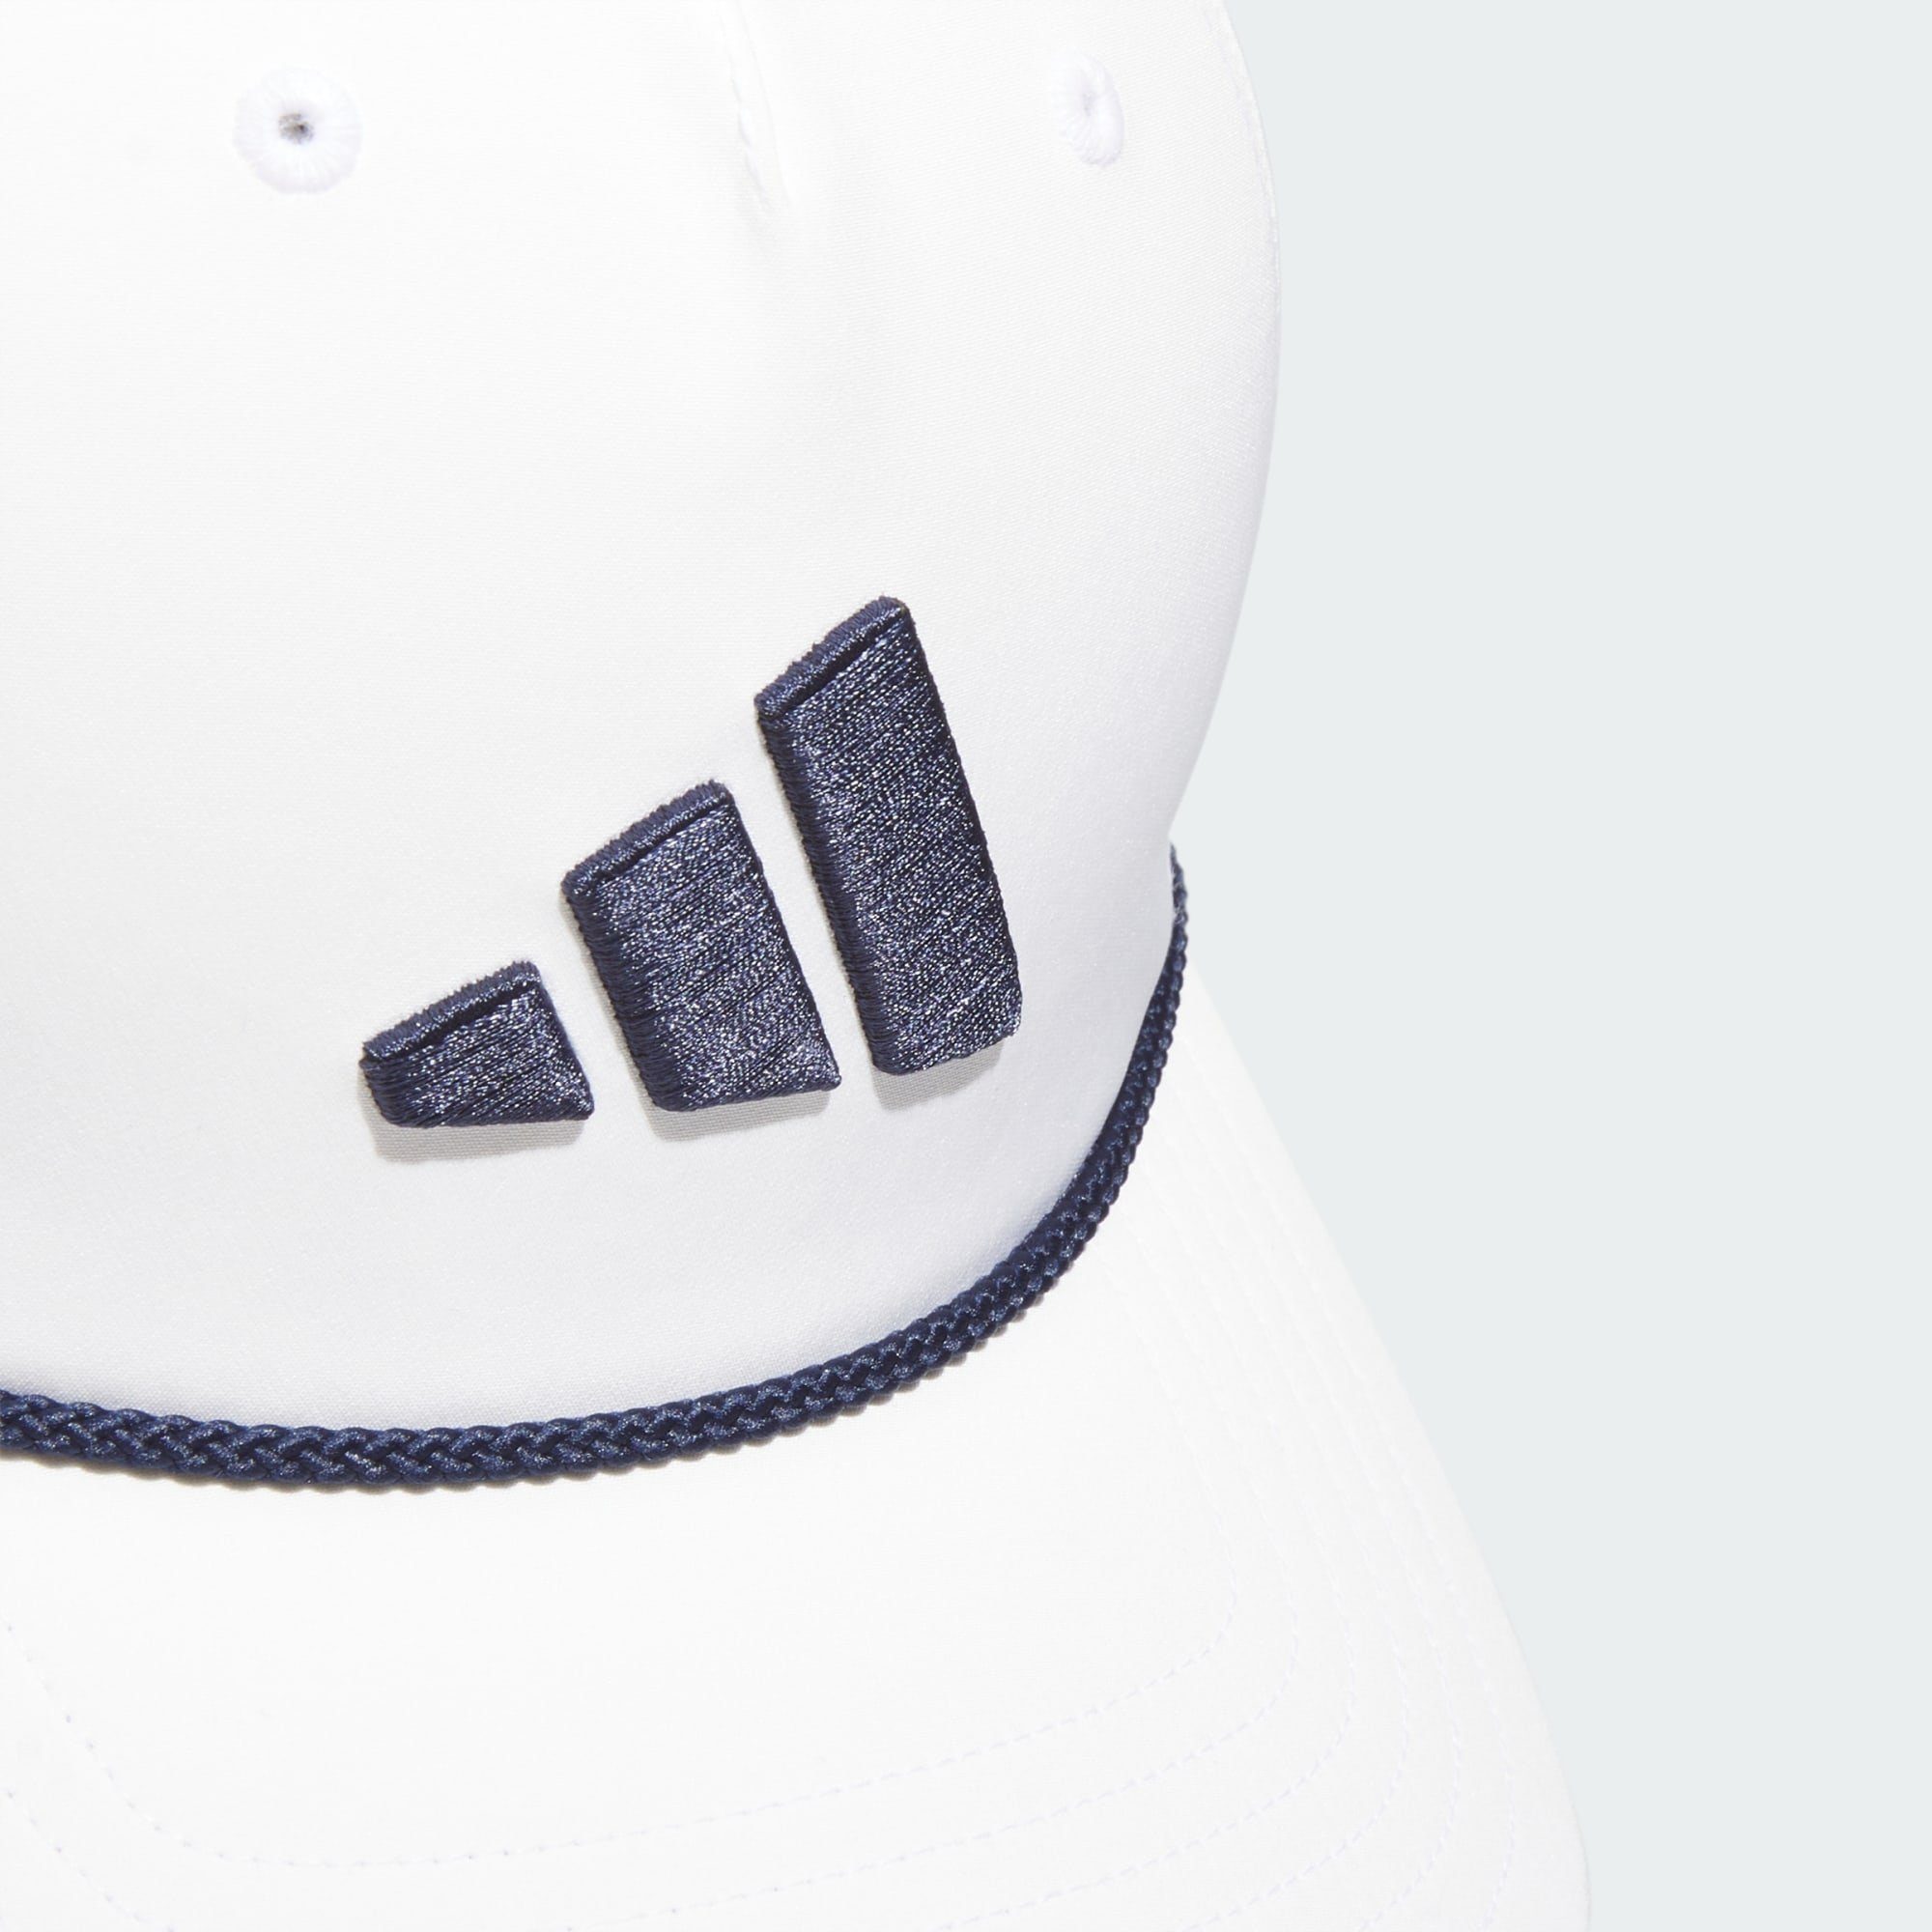 adidas Performance Baseball Cap FIVE-PANEL White HAT TOUR